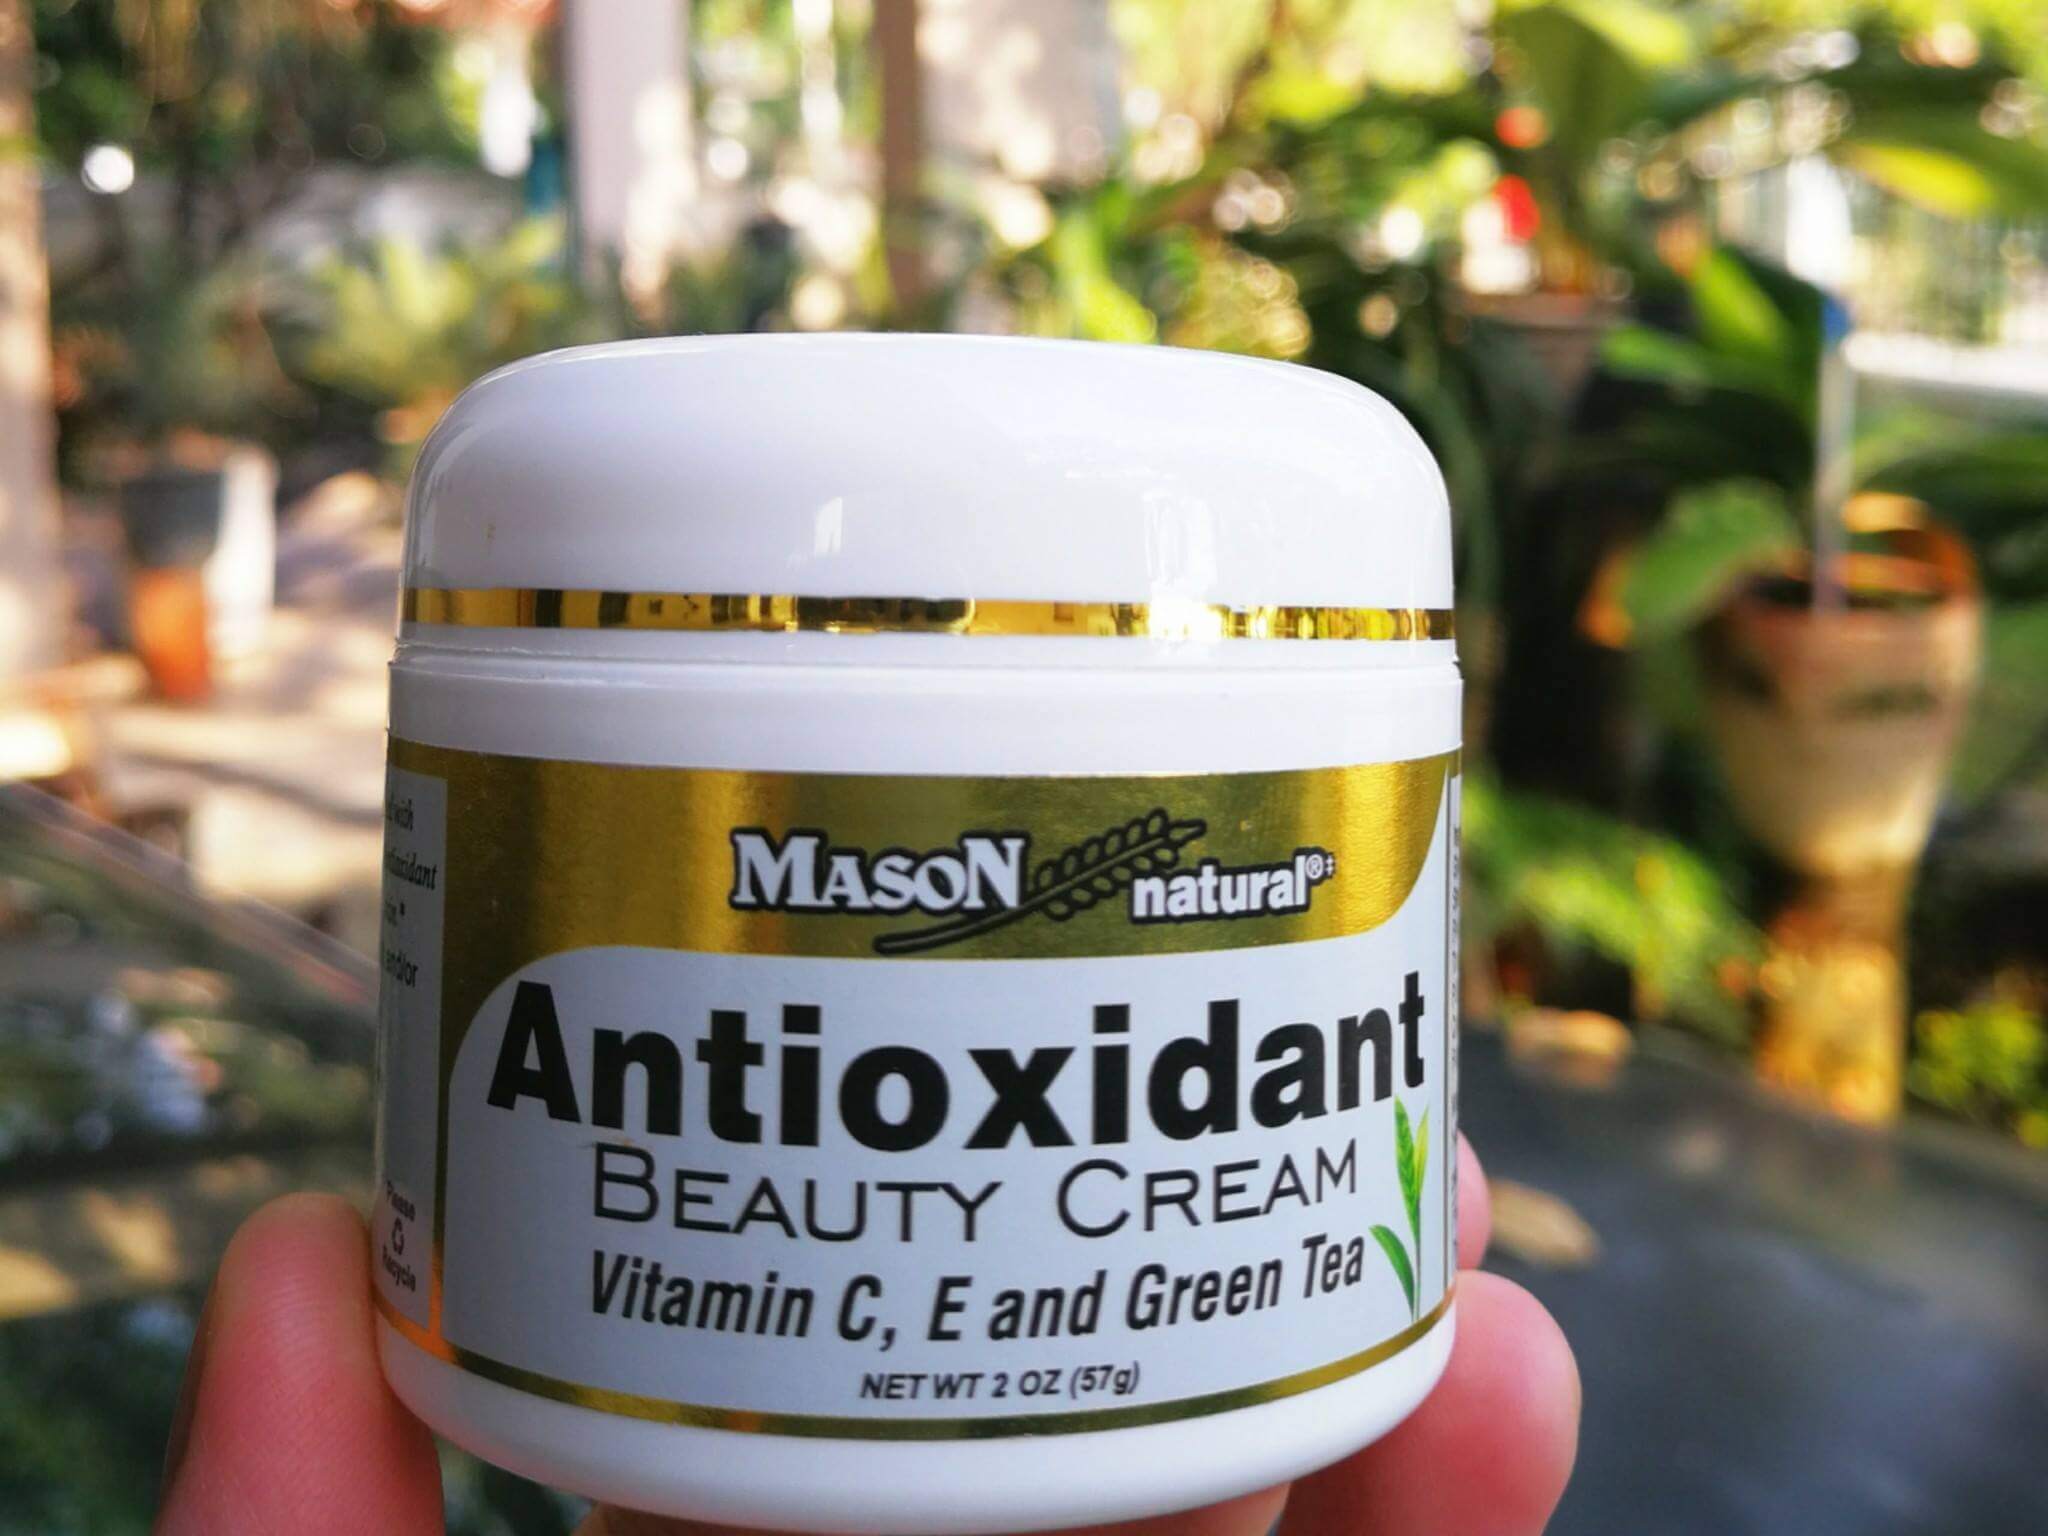 Mason Natural,mason natural reviews,Antioxidant Beauty Cream with Vitamin C E and Green Tea 57g. ,ครีมบำรุงผิวหน้า,เมสัน แอนตี้ออกซิเดนท์ครีม,